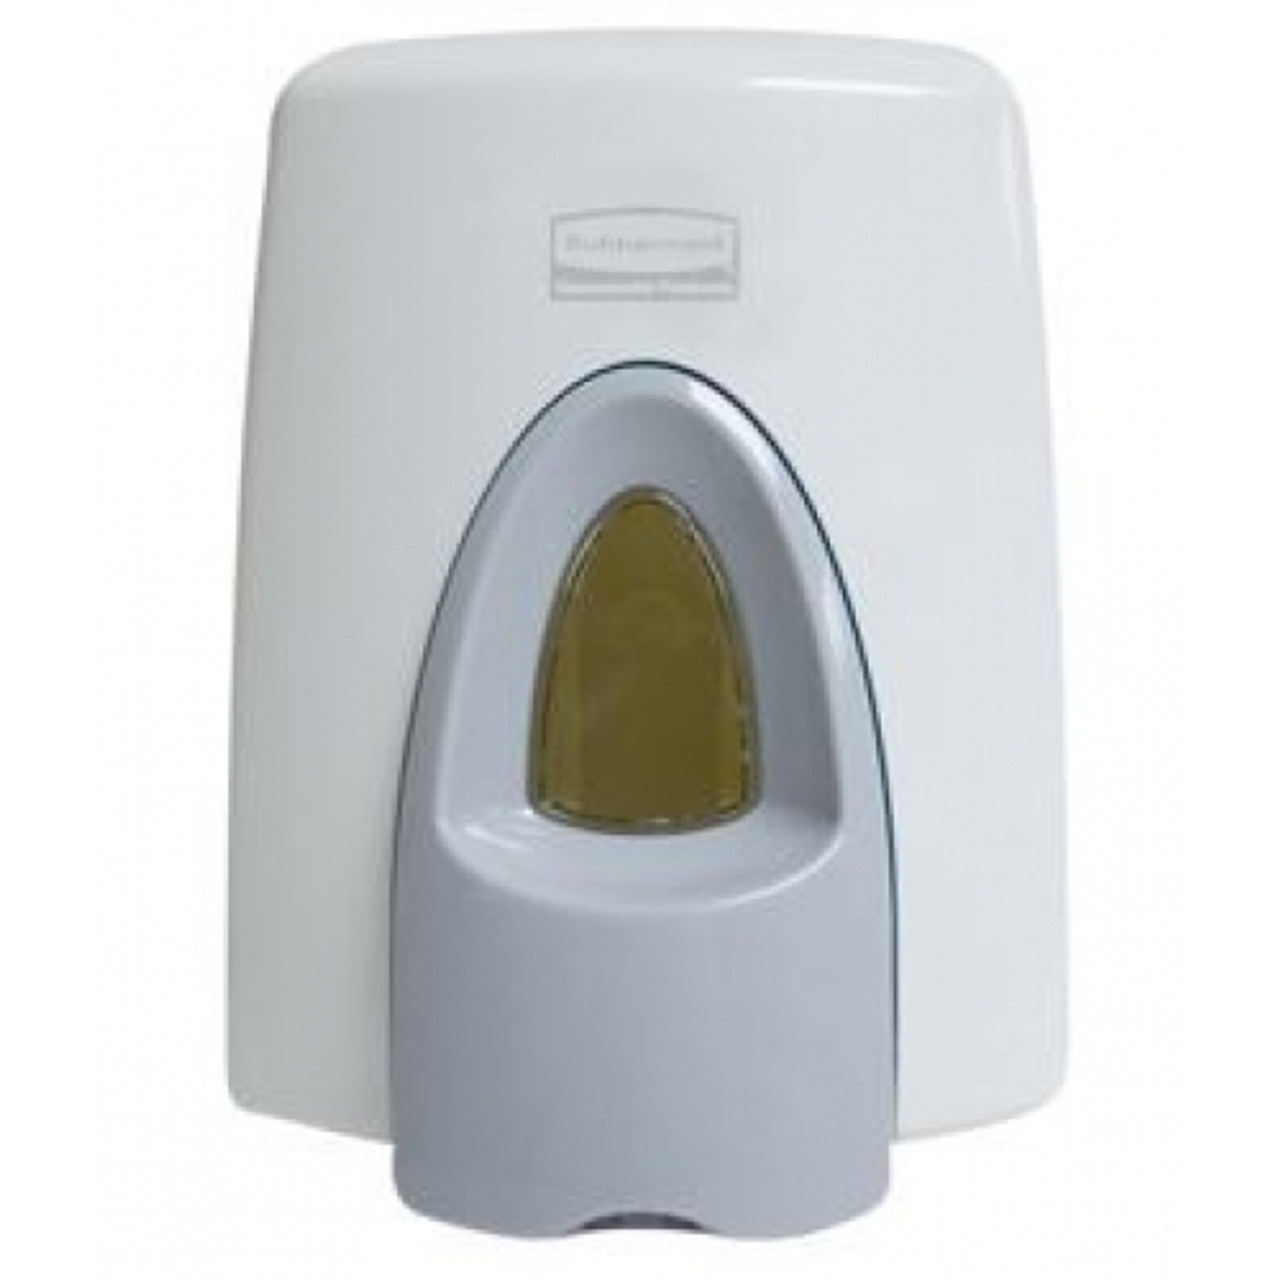 Rubbermaid 400ml Generic Seat & Handle Cleaner Dispenser